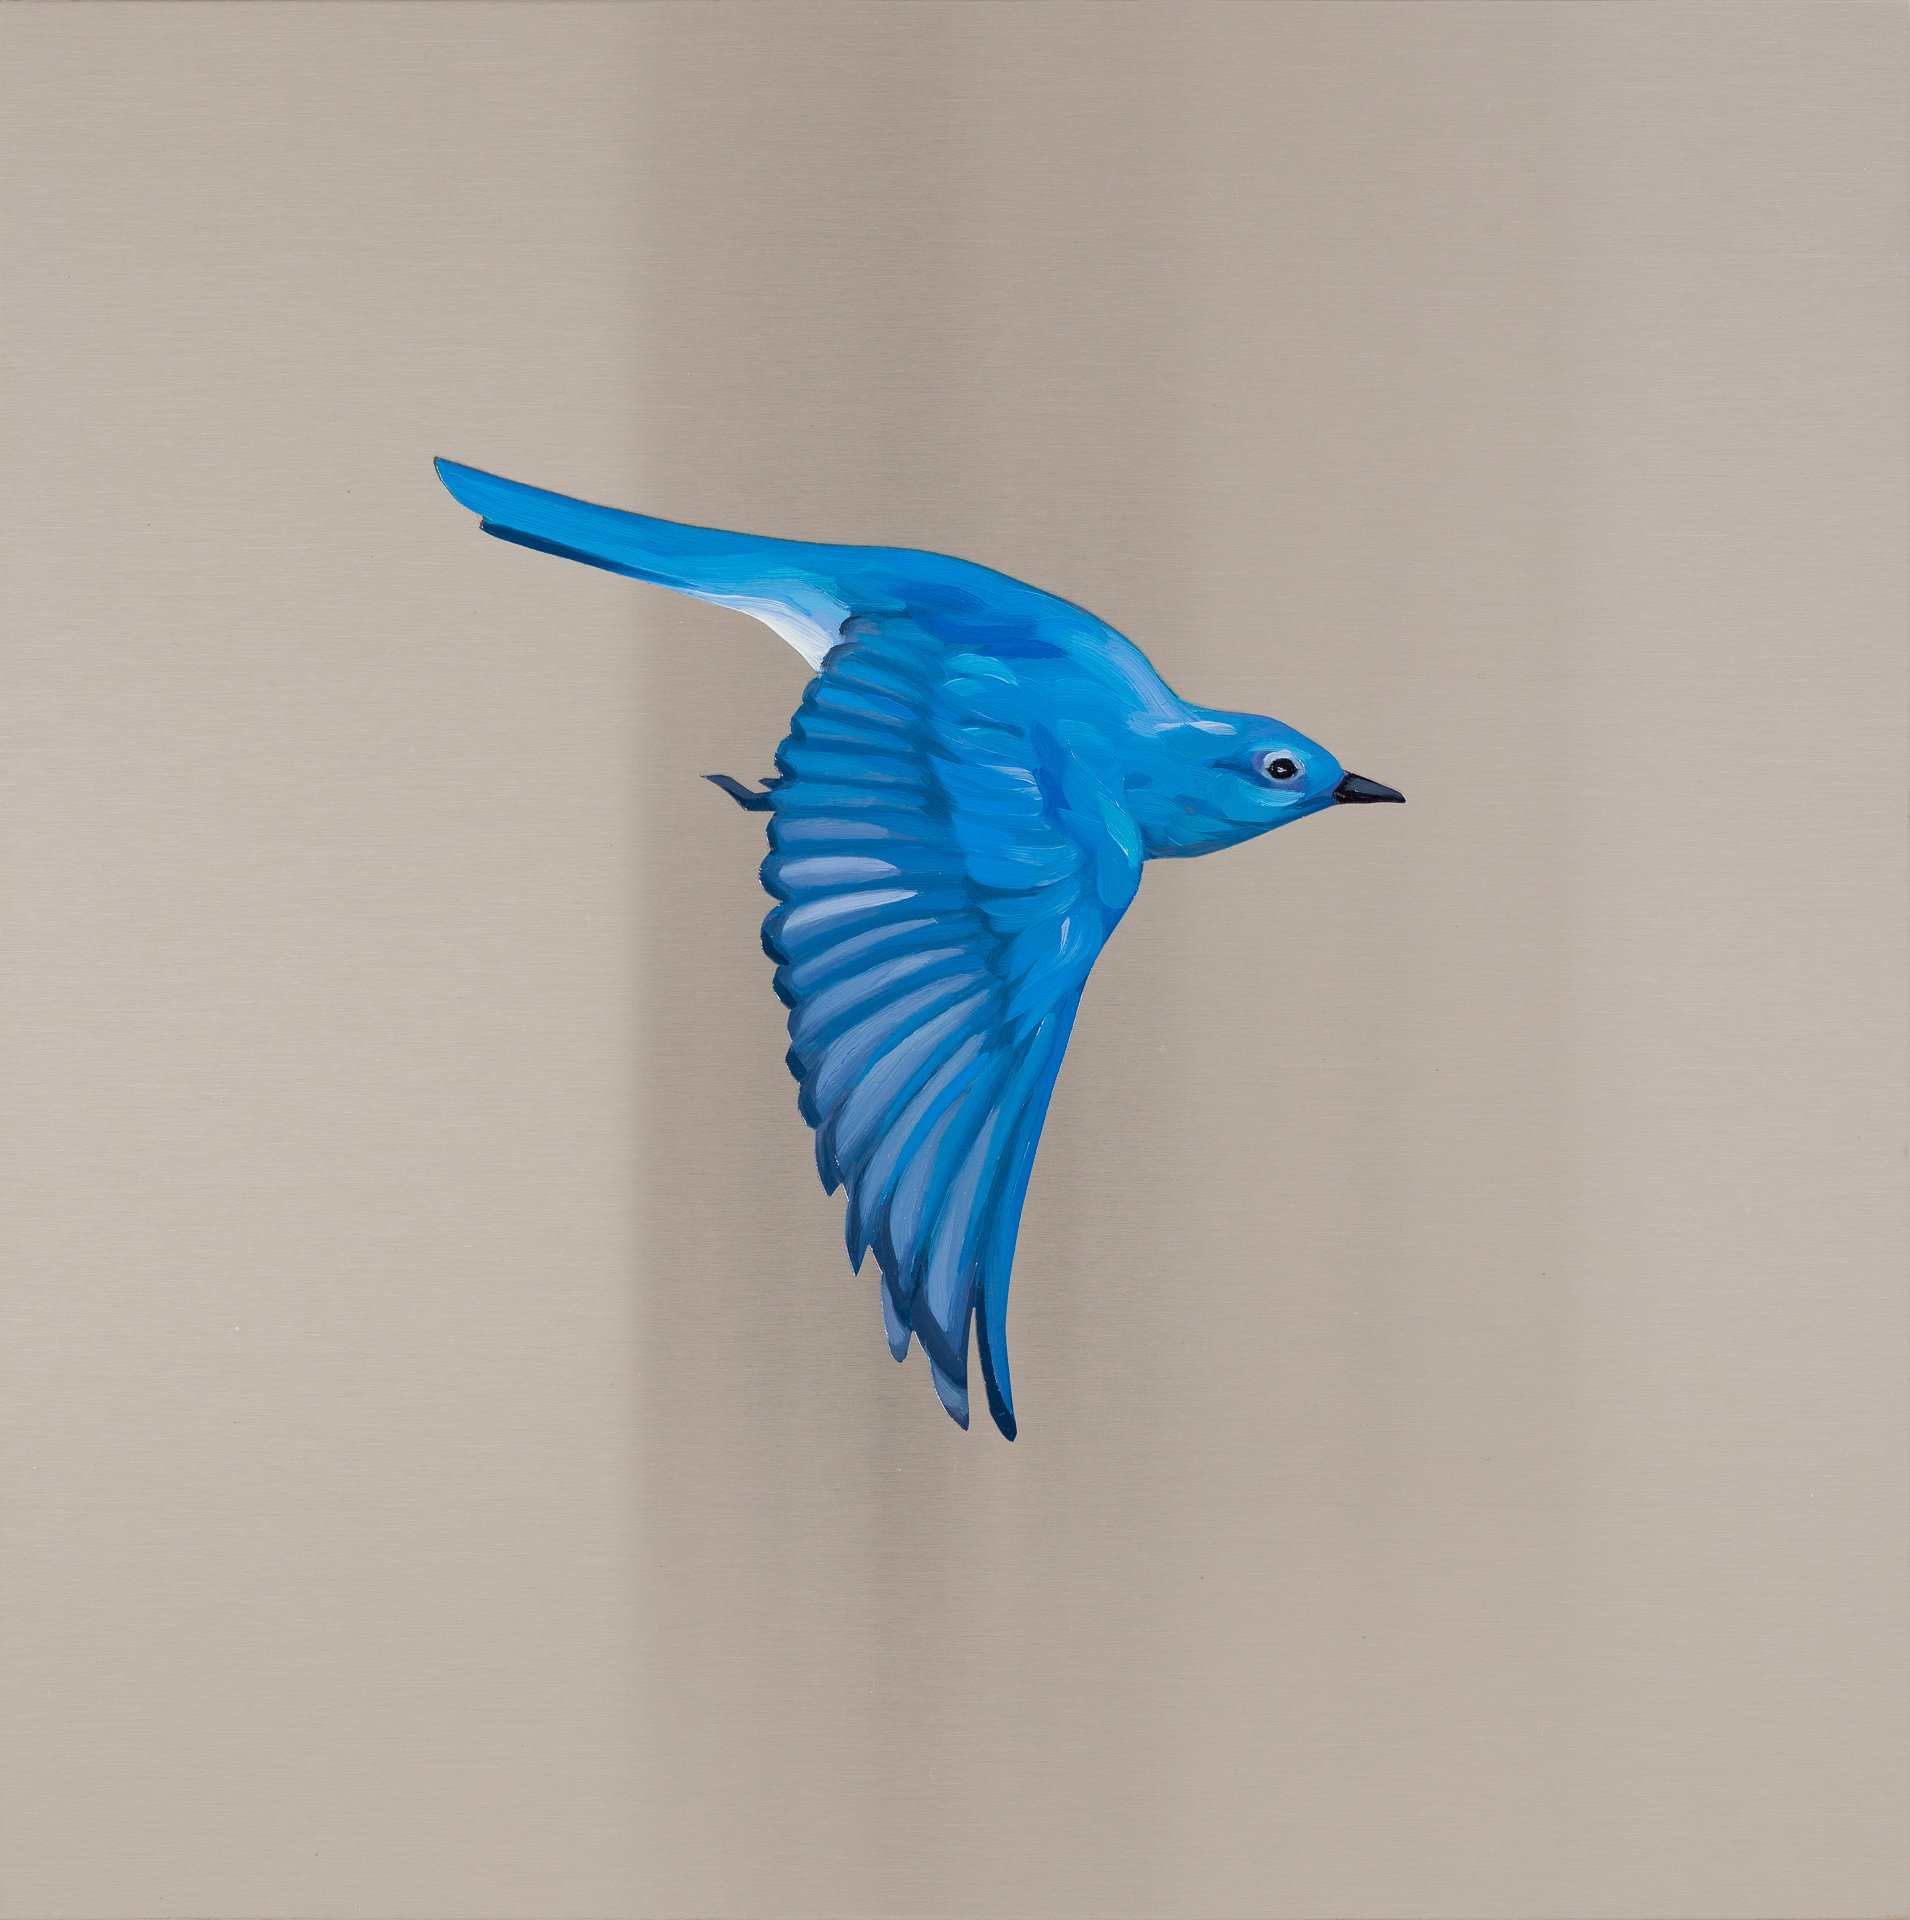  Mountain Bluebird. Oil on stainless steel, 12in x 12in 